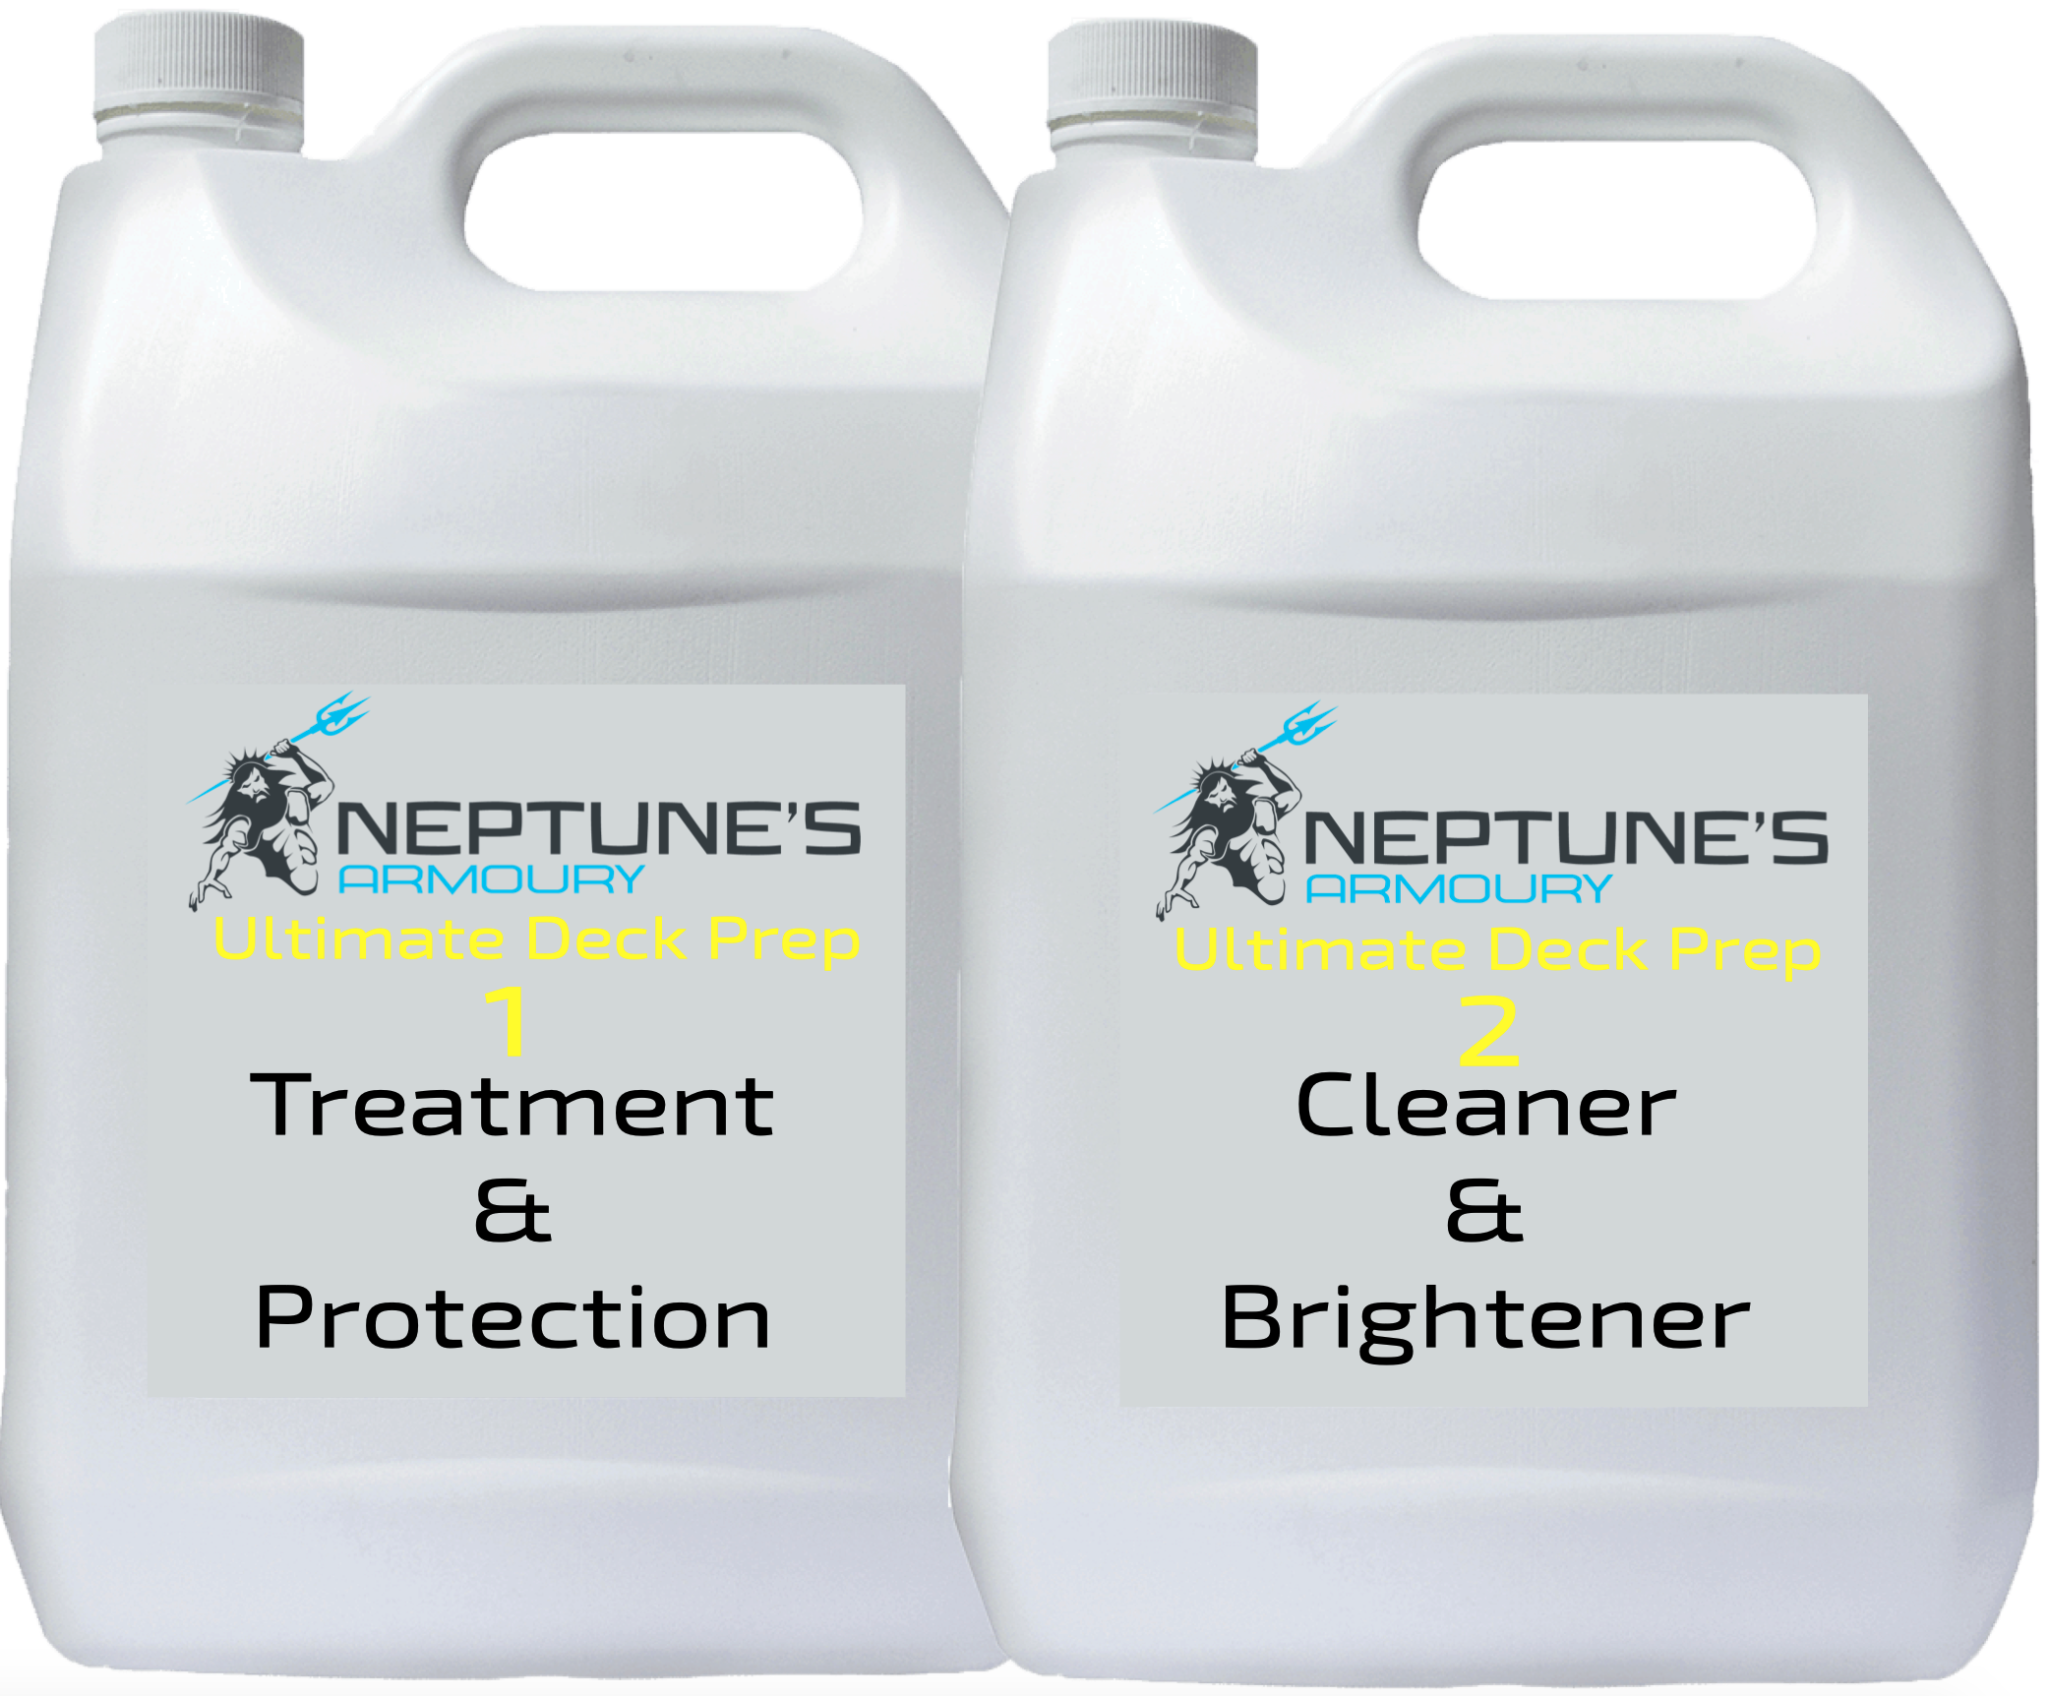 Neptunes Armoury Cleaner & Brightner